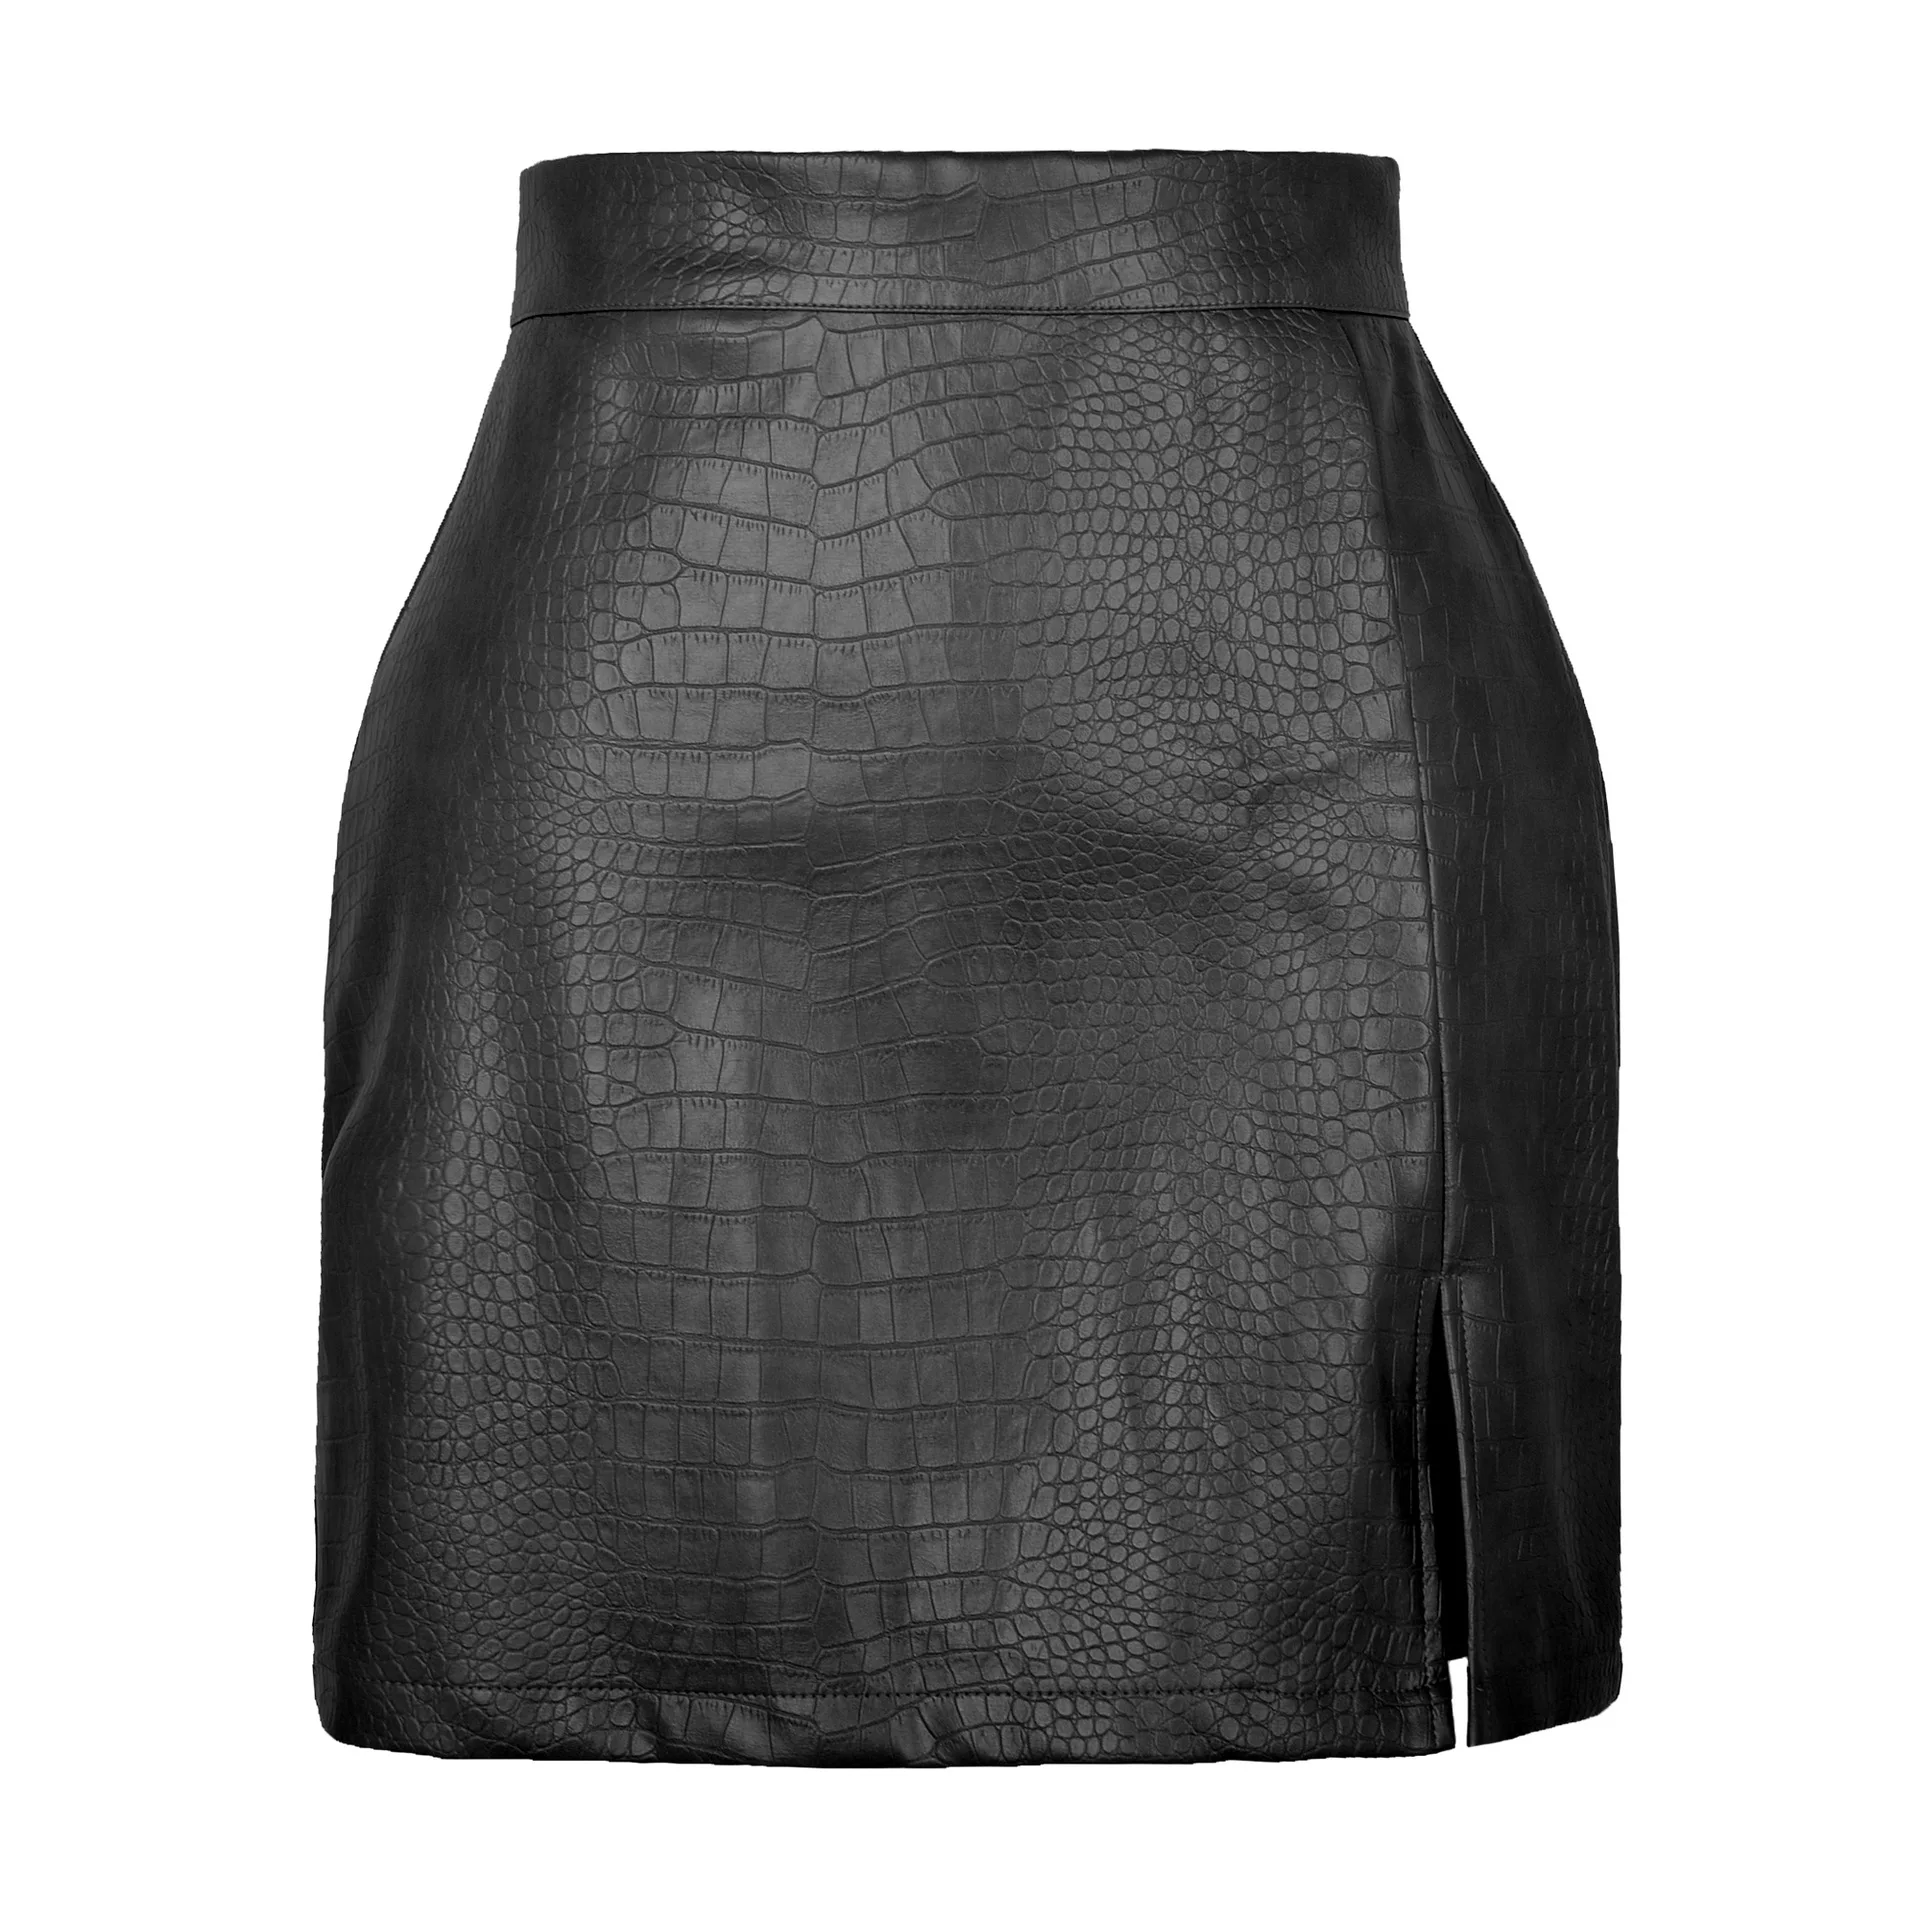 YingTang Women's Basic High Waist Faux Leather party club Bodycon Mini Pencil Skirt